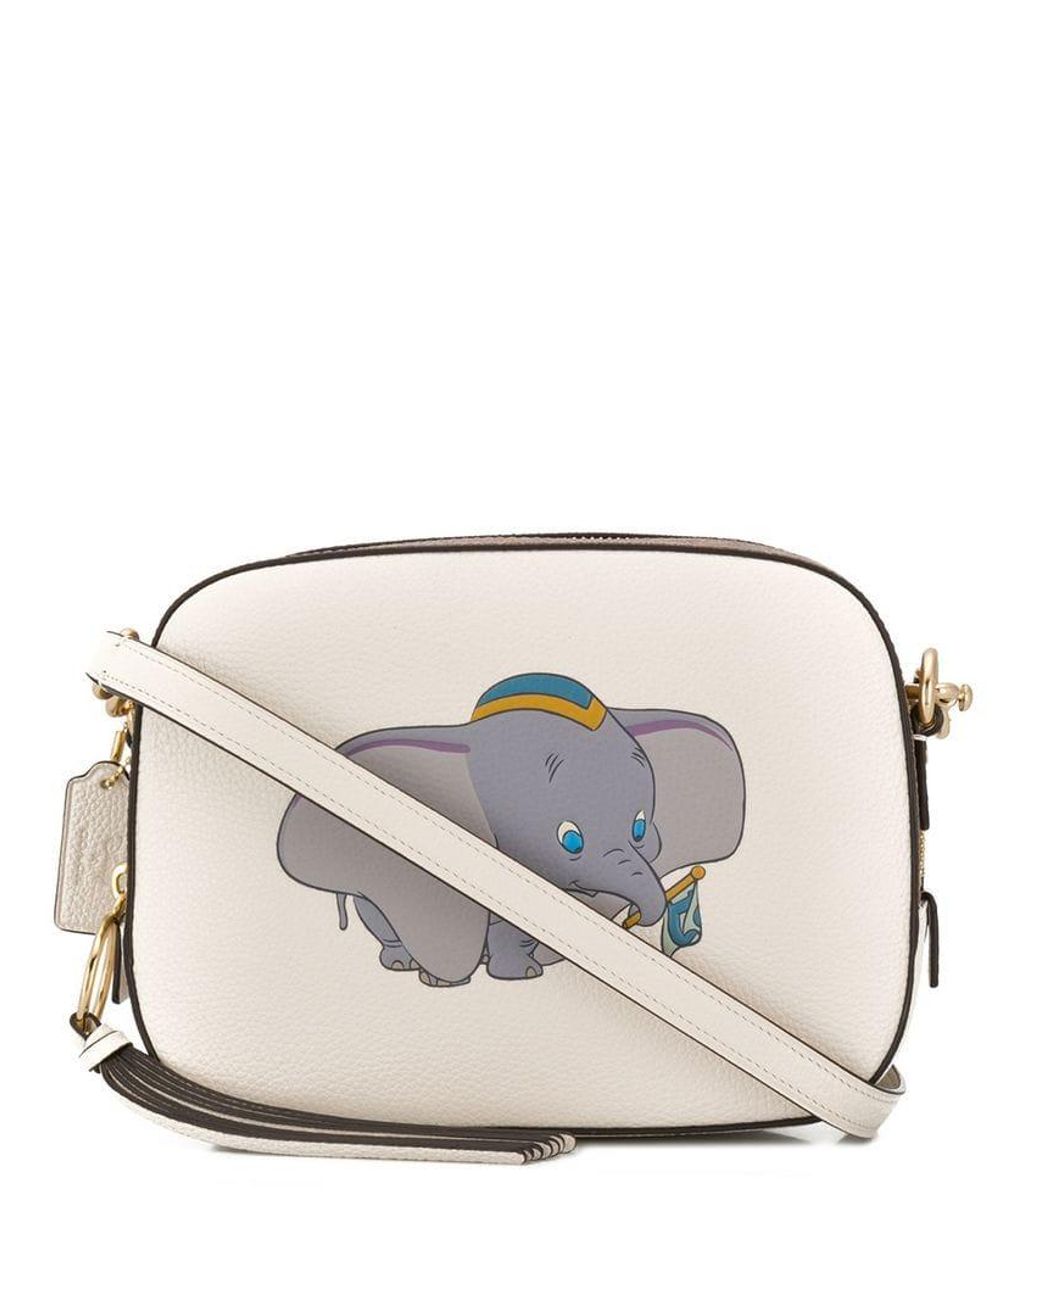 COACH Disney Dumbo Print Bag in White | Lyst